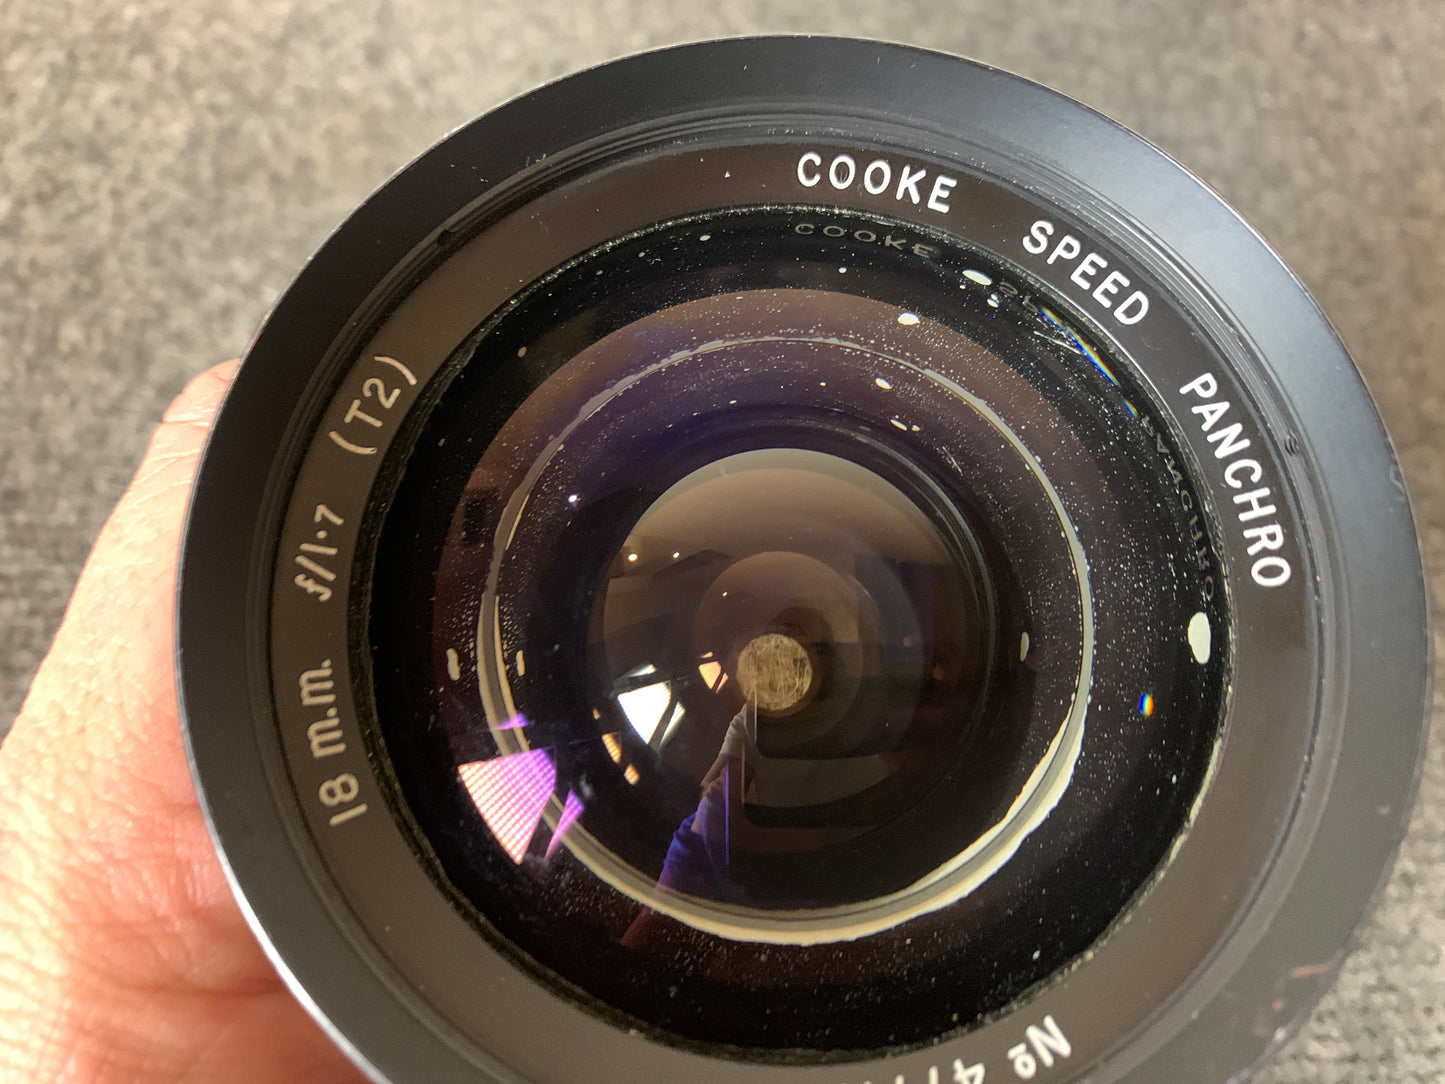 Cooke Speed Panchro 18mm f1.7 T2  prime cine Lens - Arriflex Arri standard mount